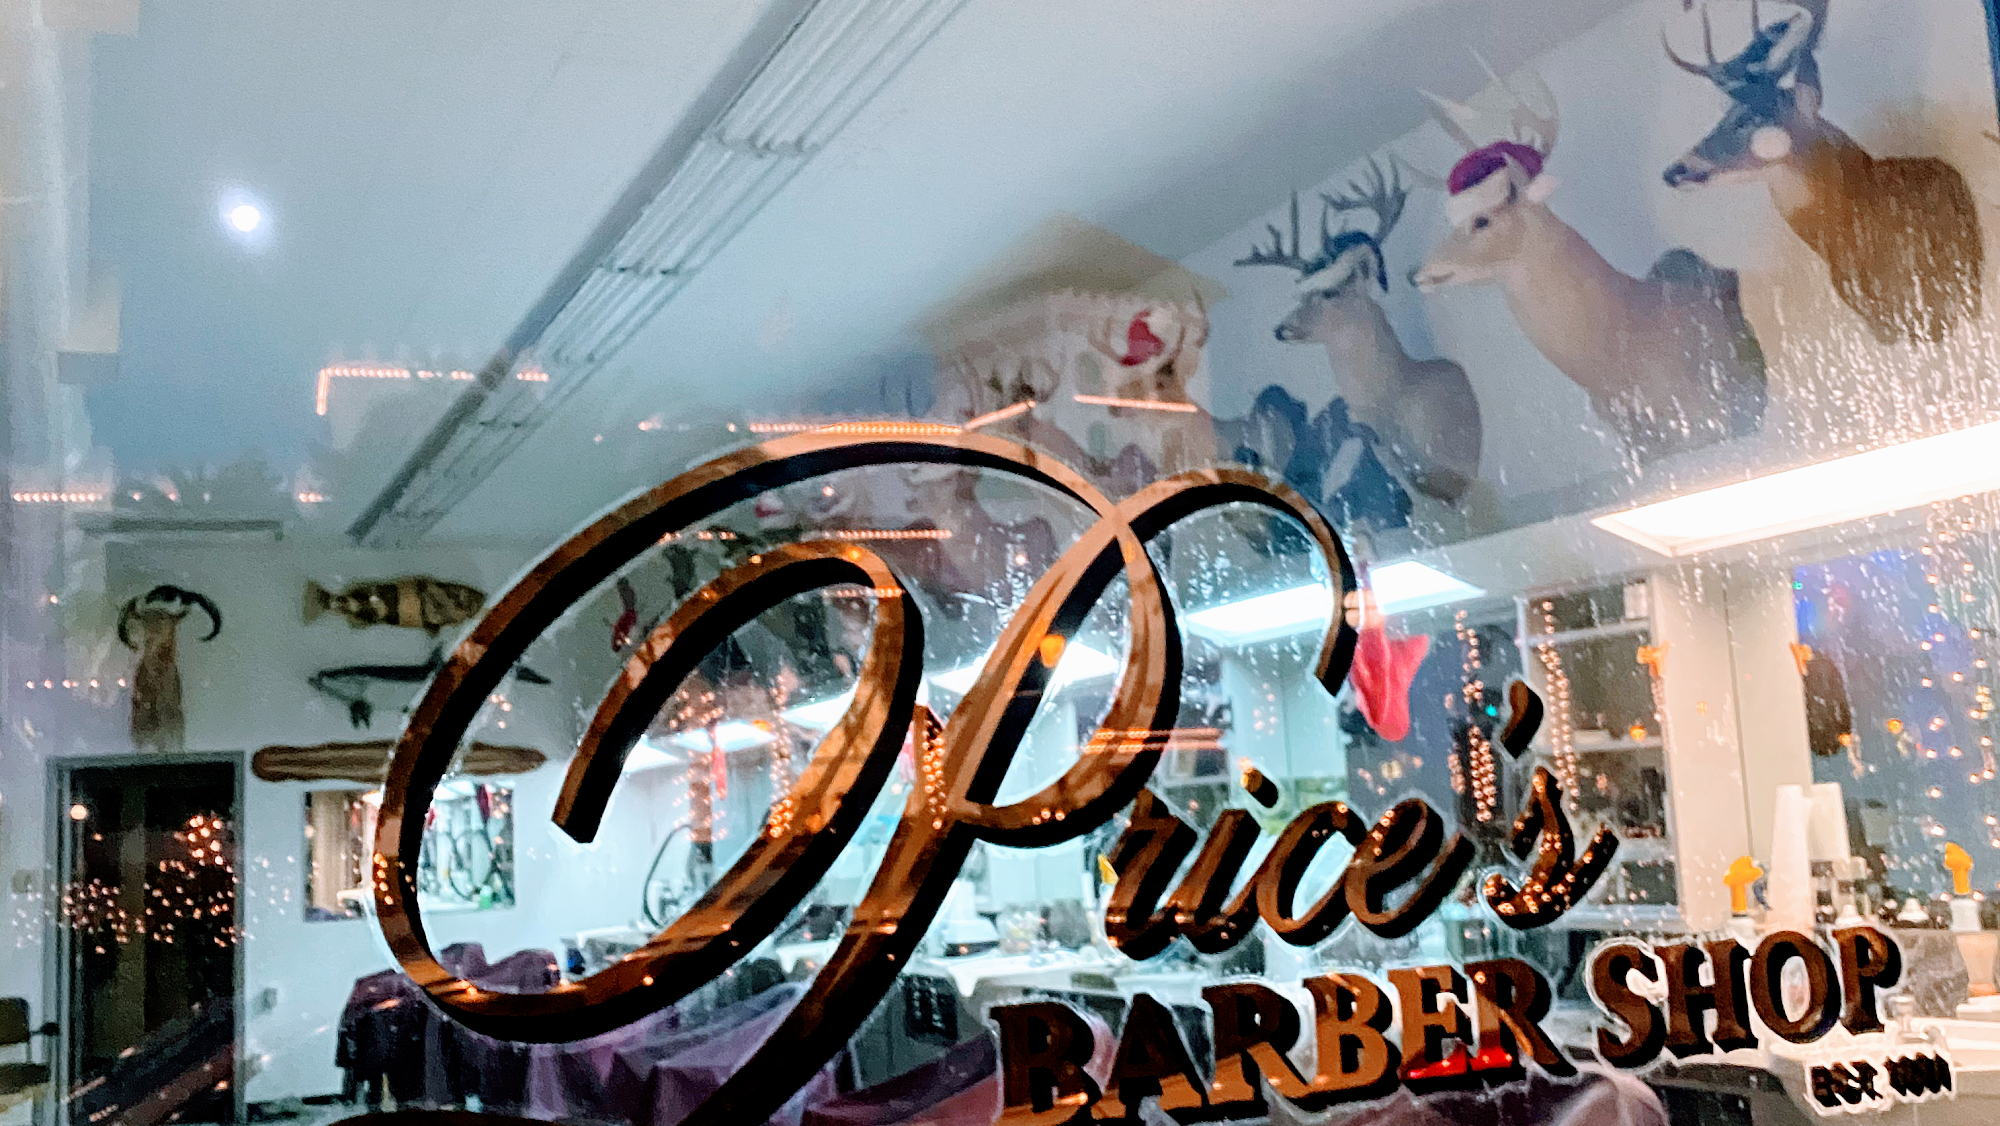 Price's Barber Shop